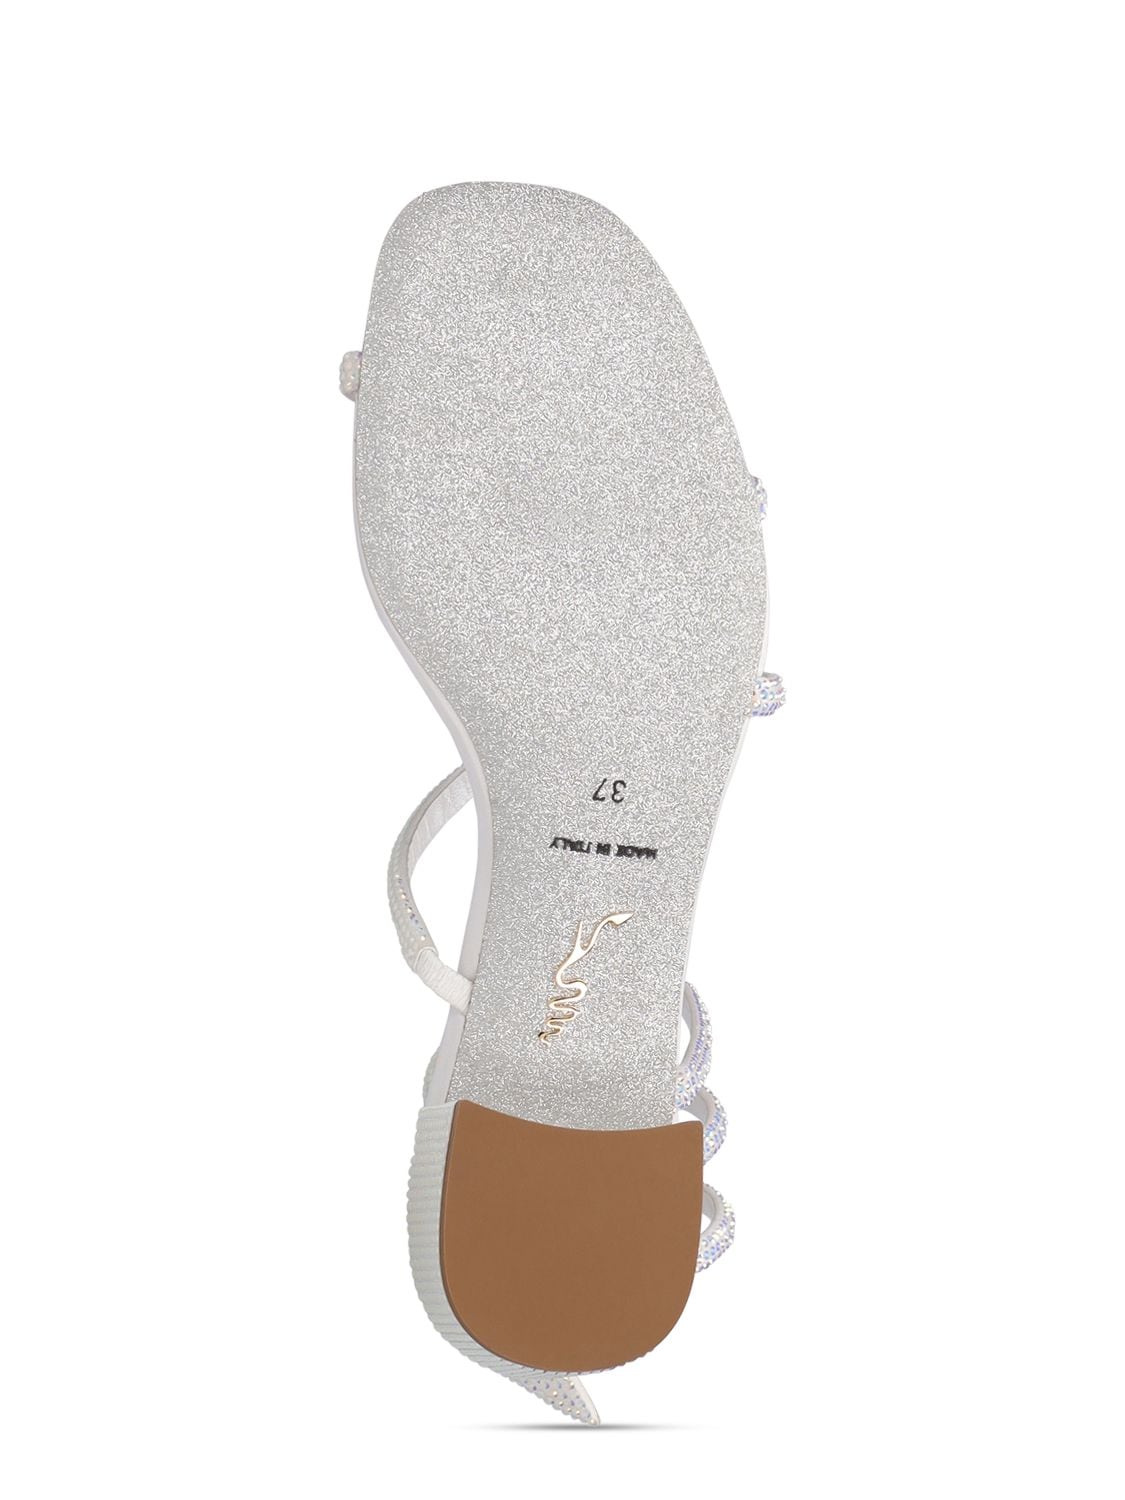 Shop René Caovilla 35mm Embellished Satin Sandals In White